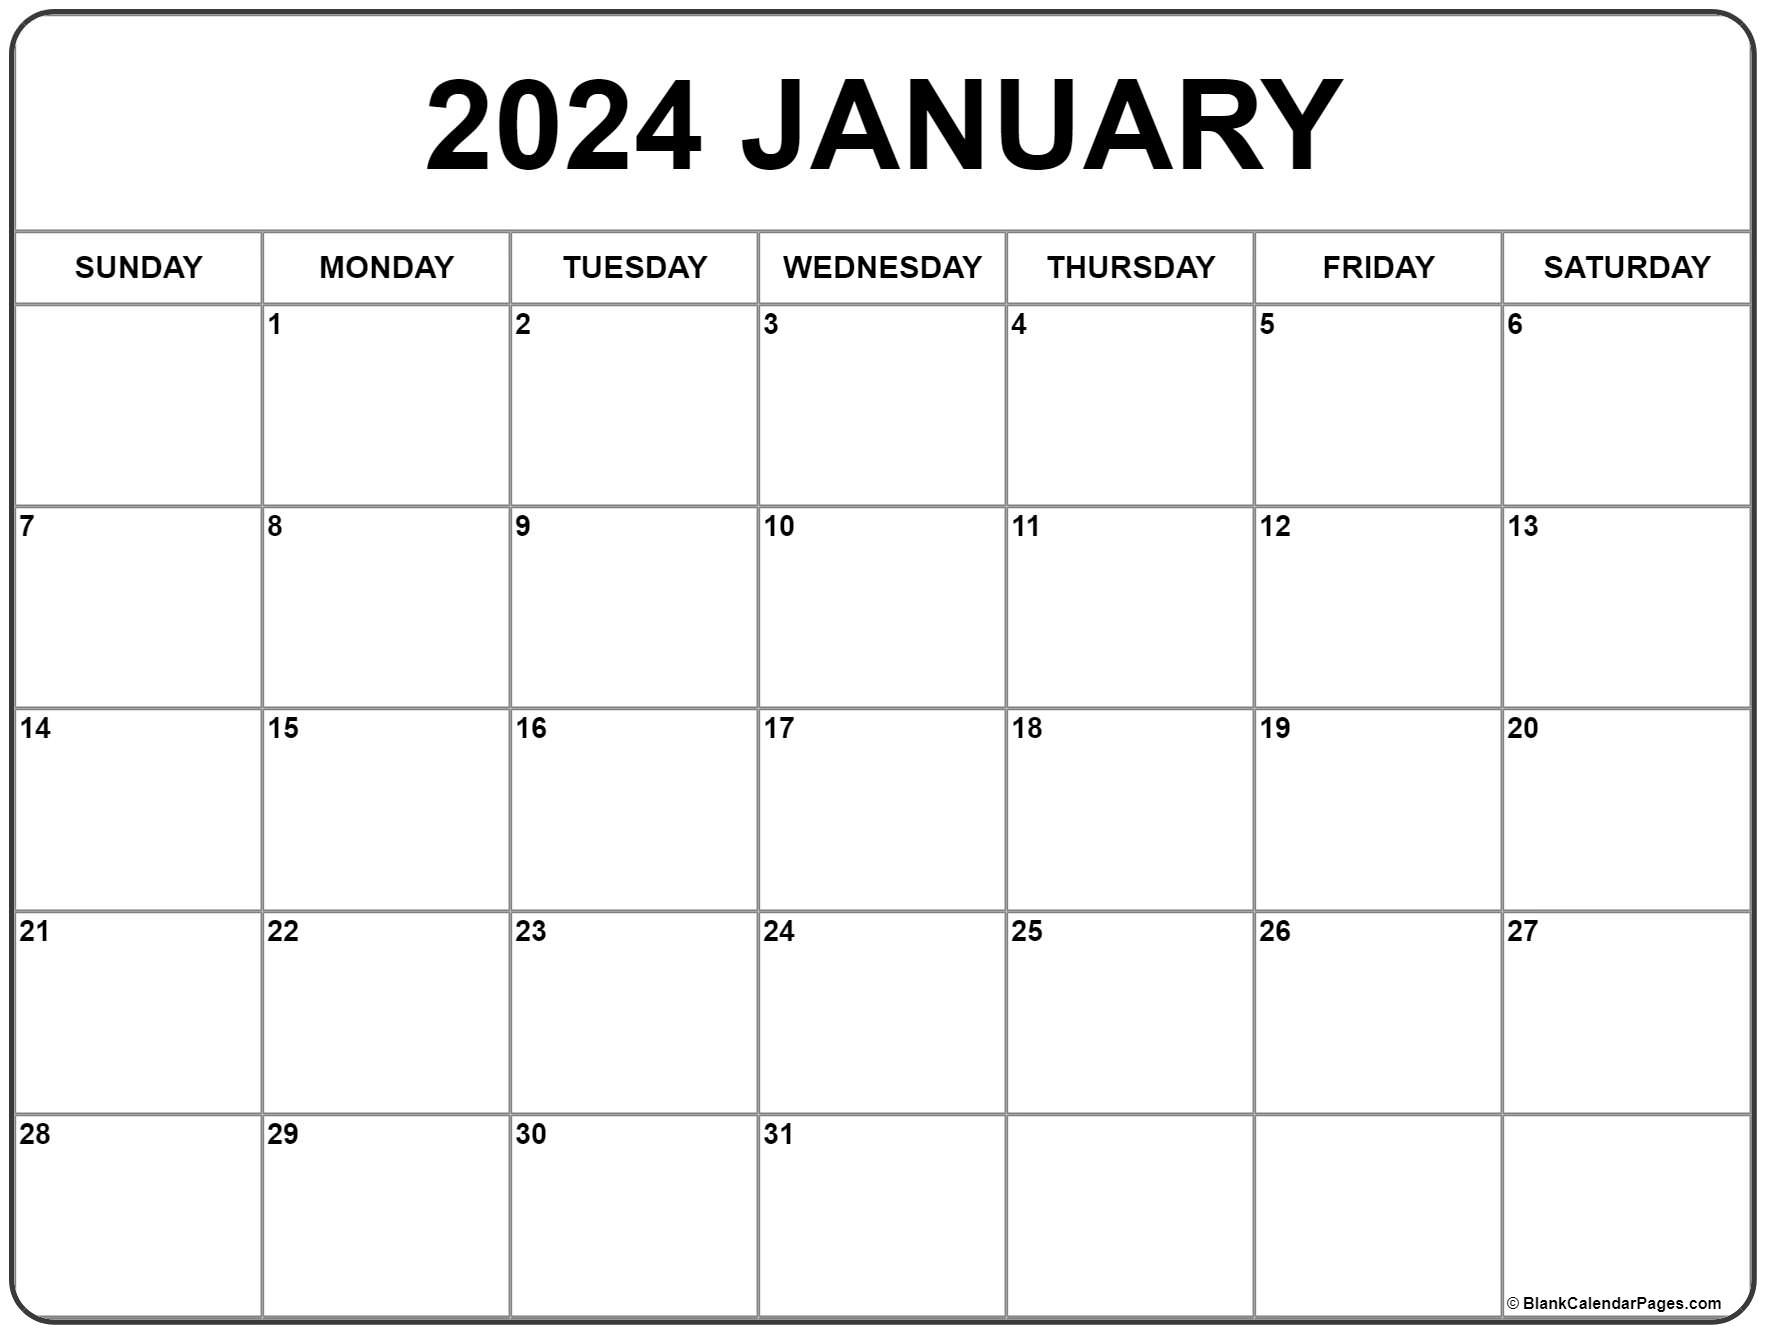 January 2024 Calendar | Free Printable Calendar for Free Printable Calendar For January 2024